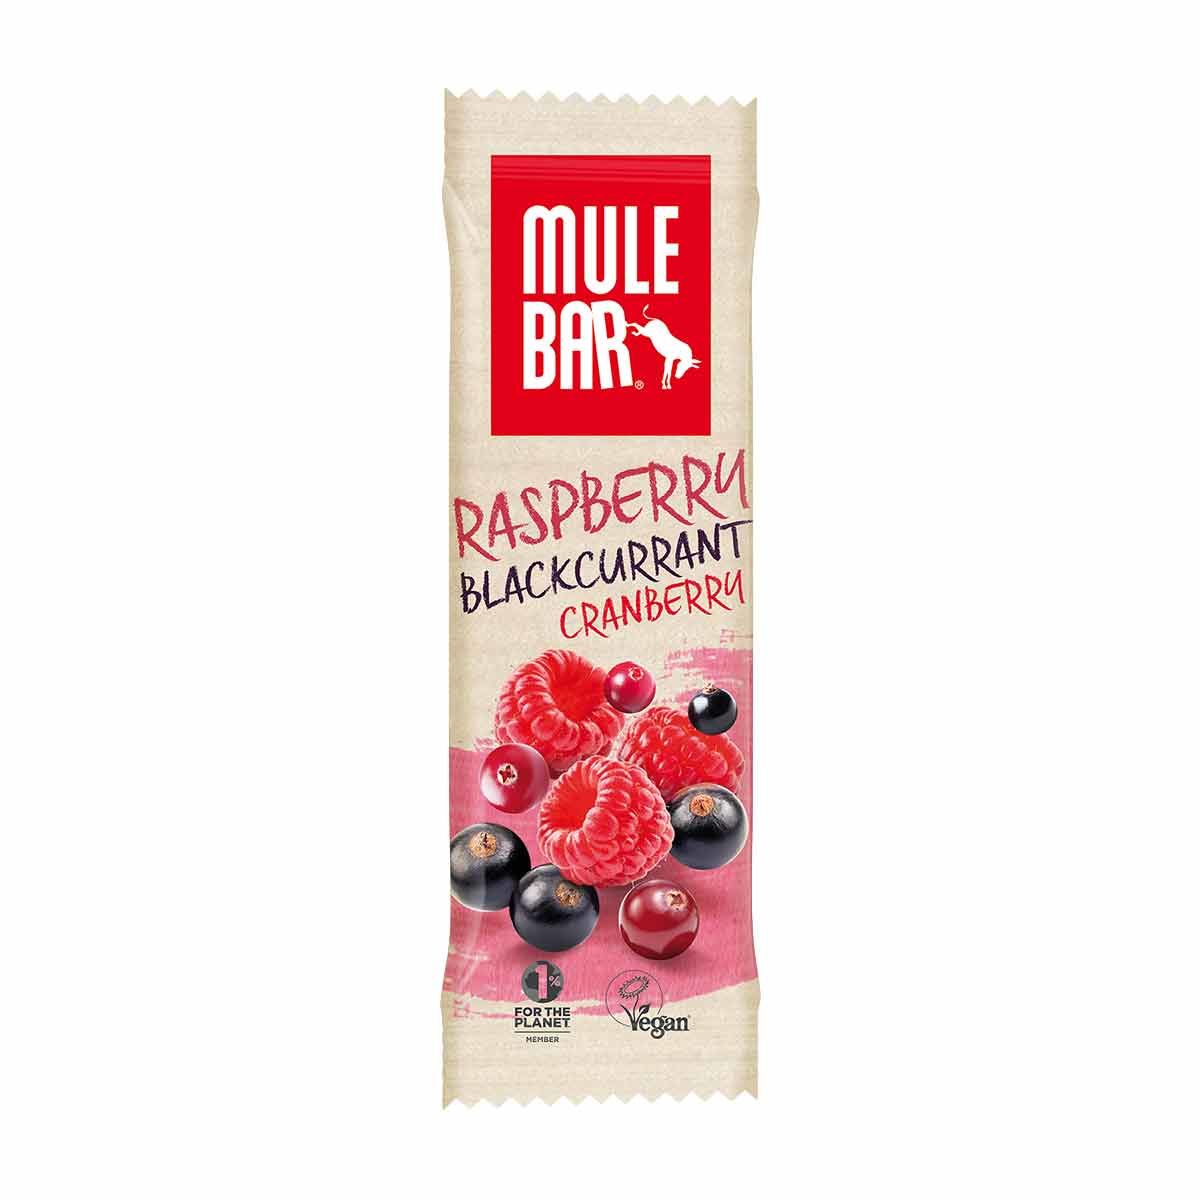 Mulebar energy bar - Raspberry, blackcurrant and cranberry